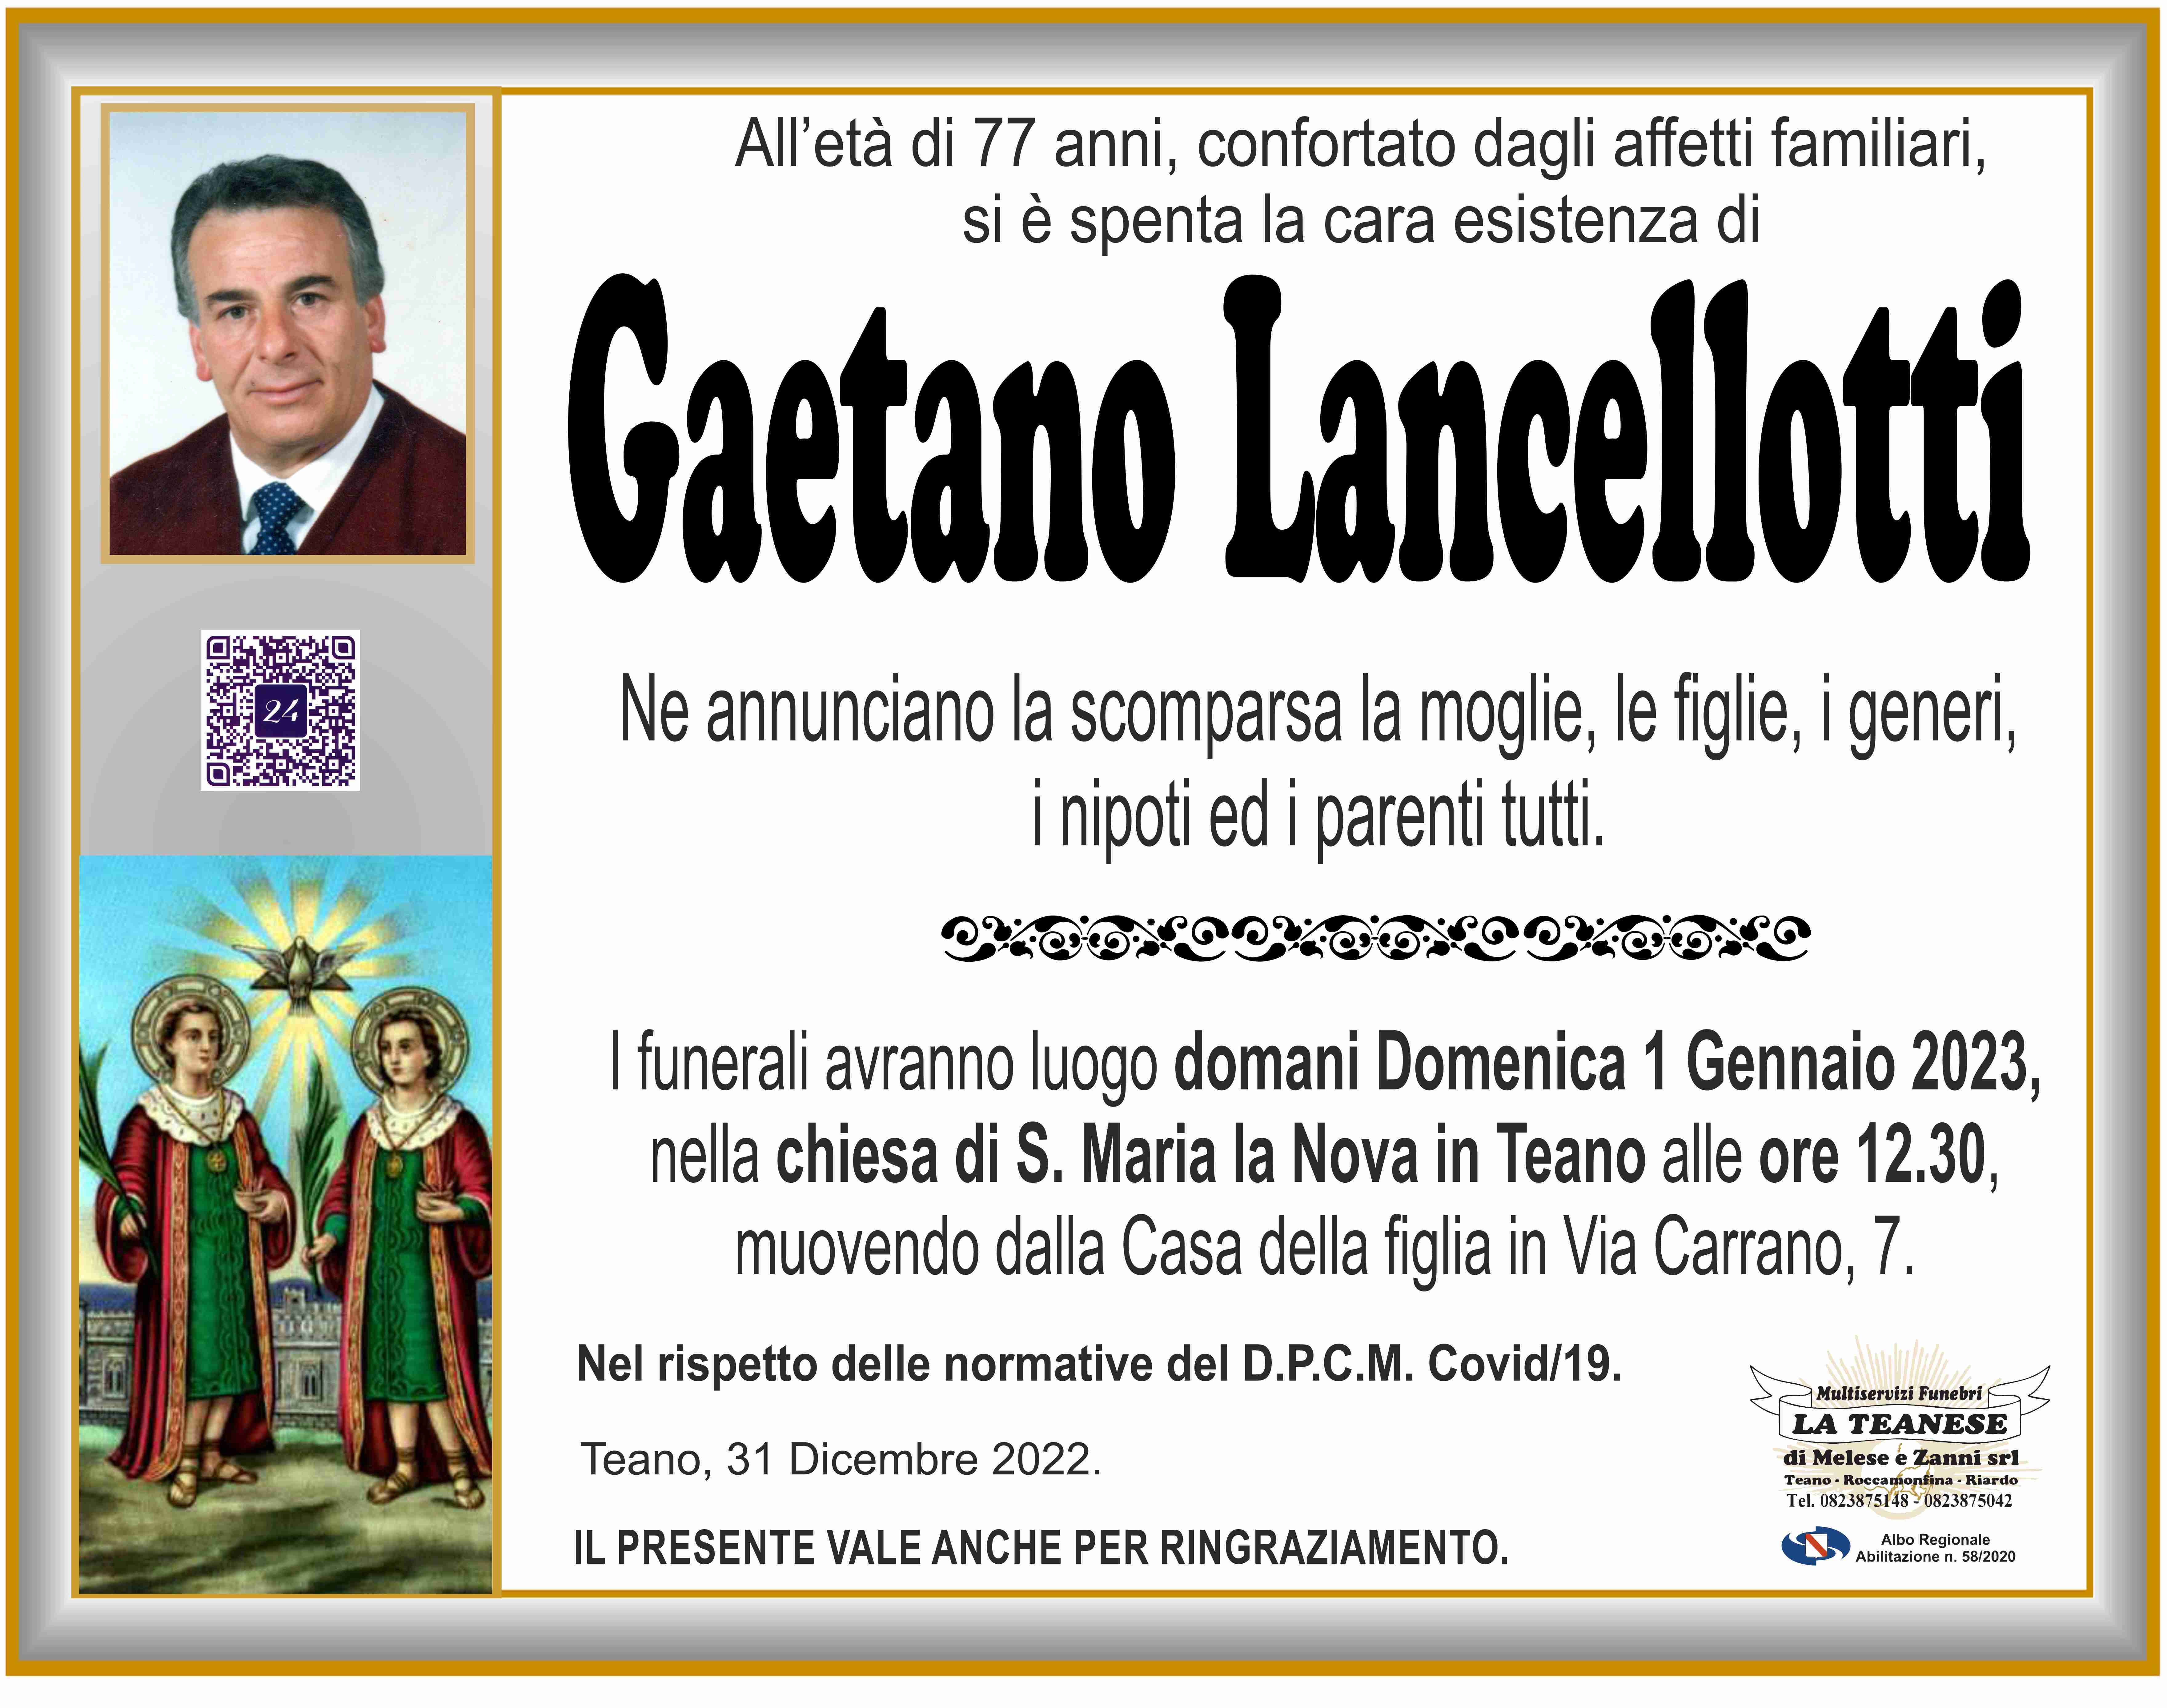 Gaetano Lancellotti